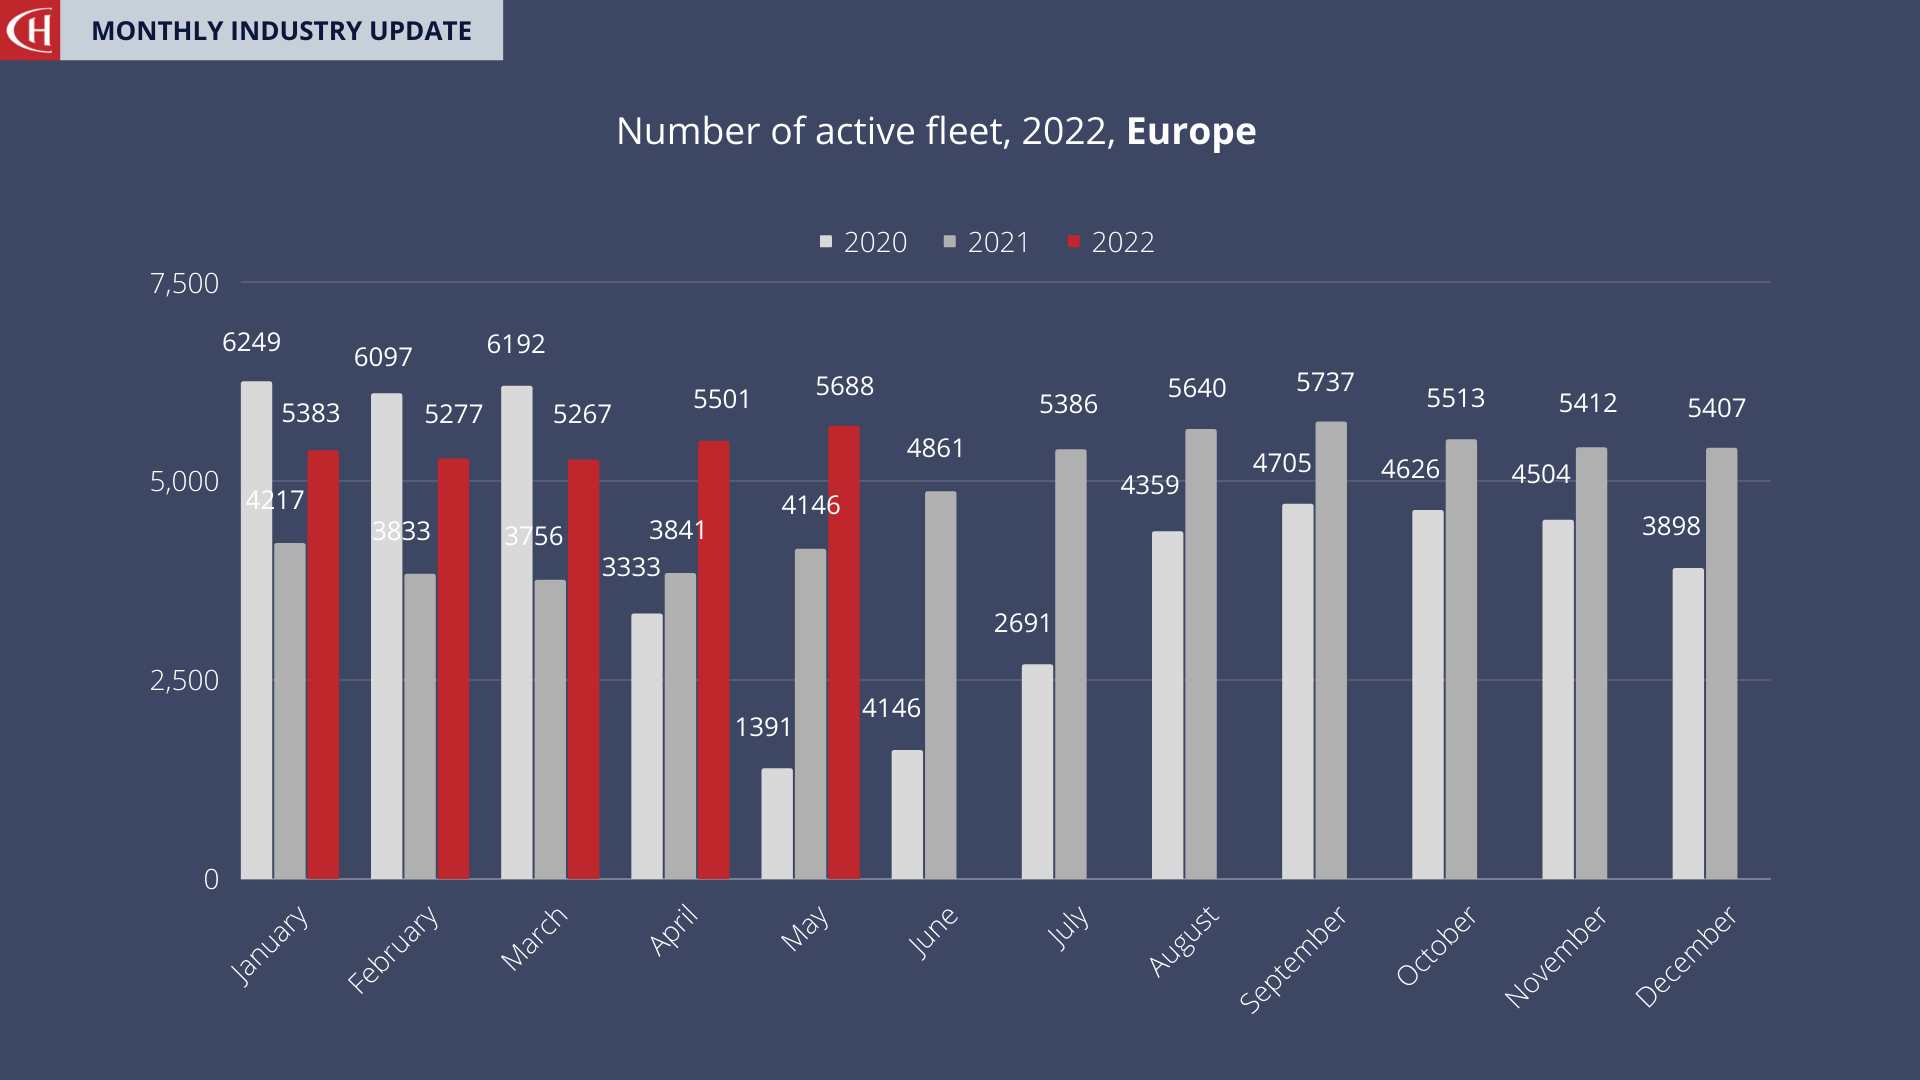 Europe Fleet Size May 2022